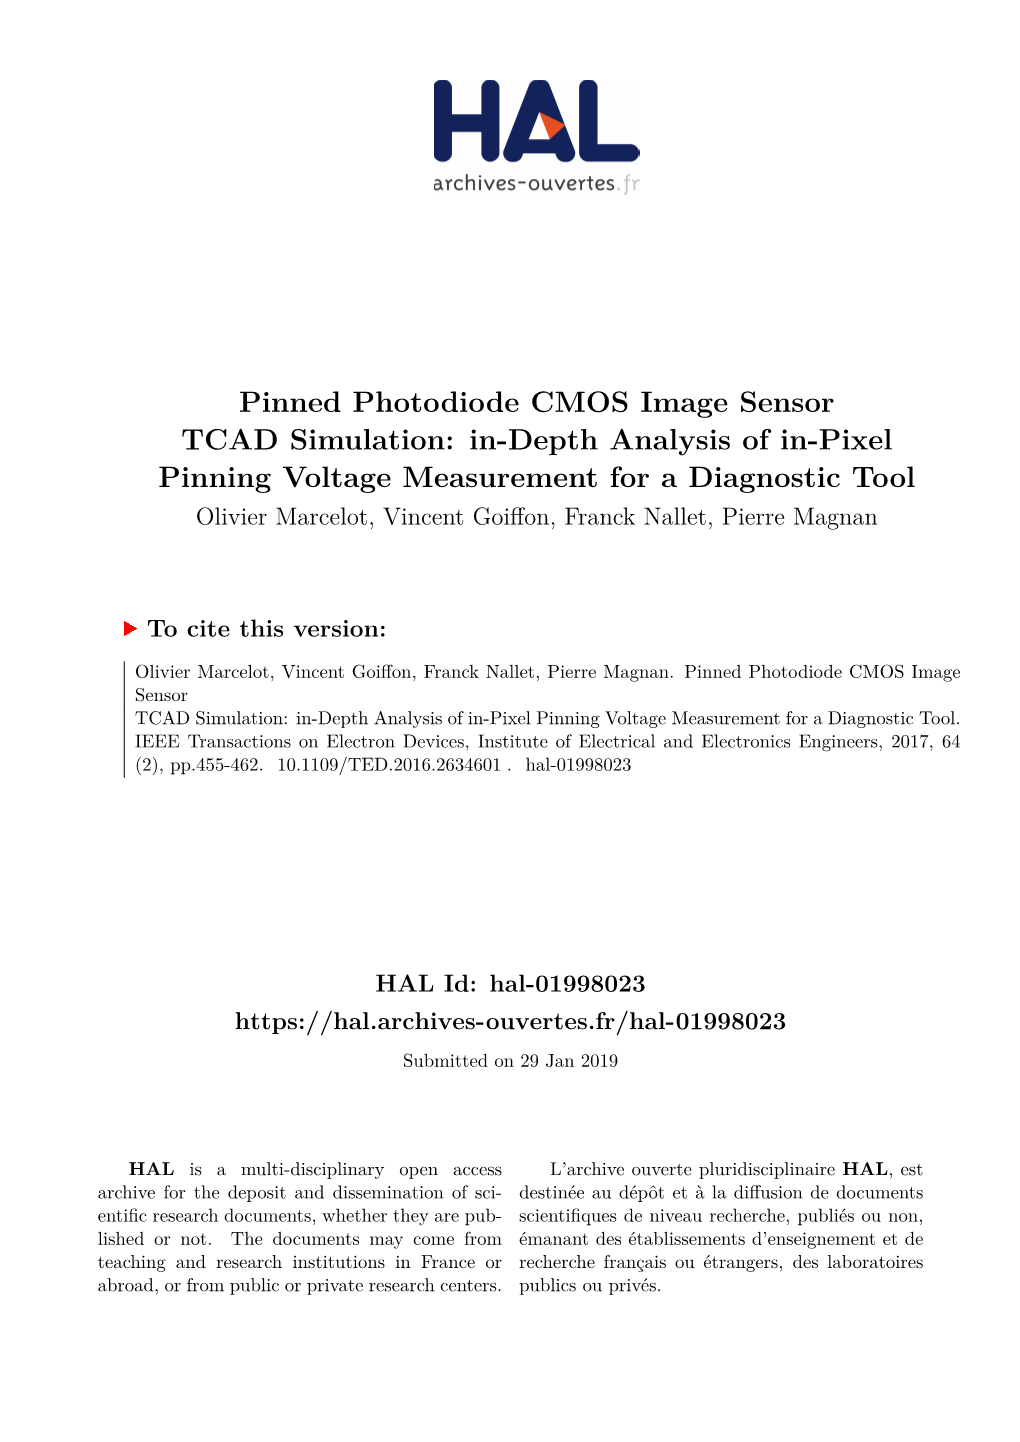 Pinned Photodiode CMOS Image Sensortcad